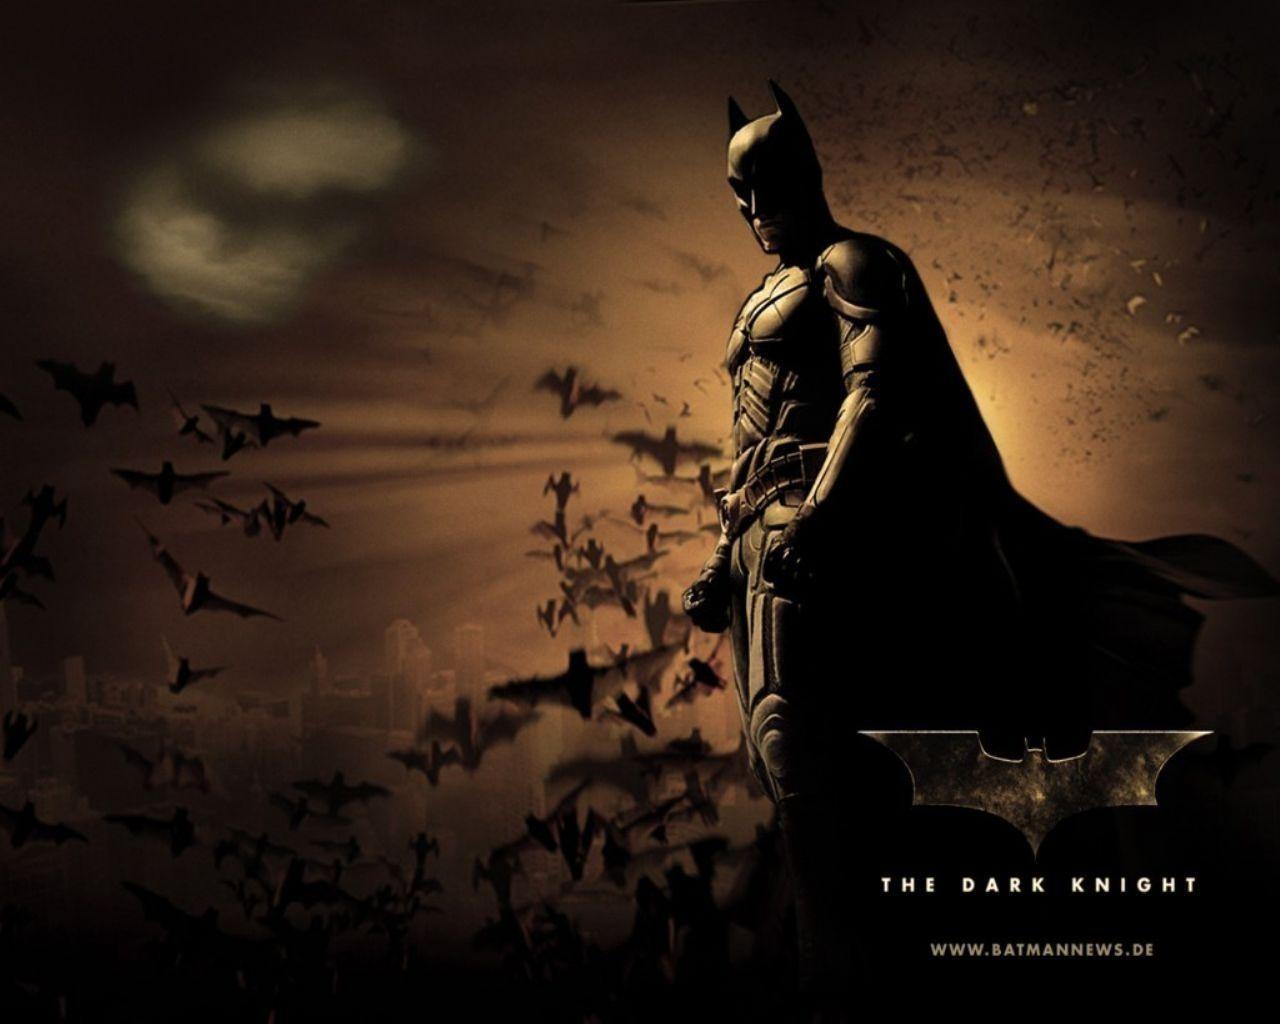 batman begins swear to me: The Dark Knight